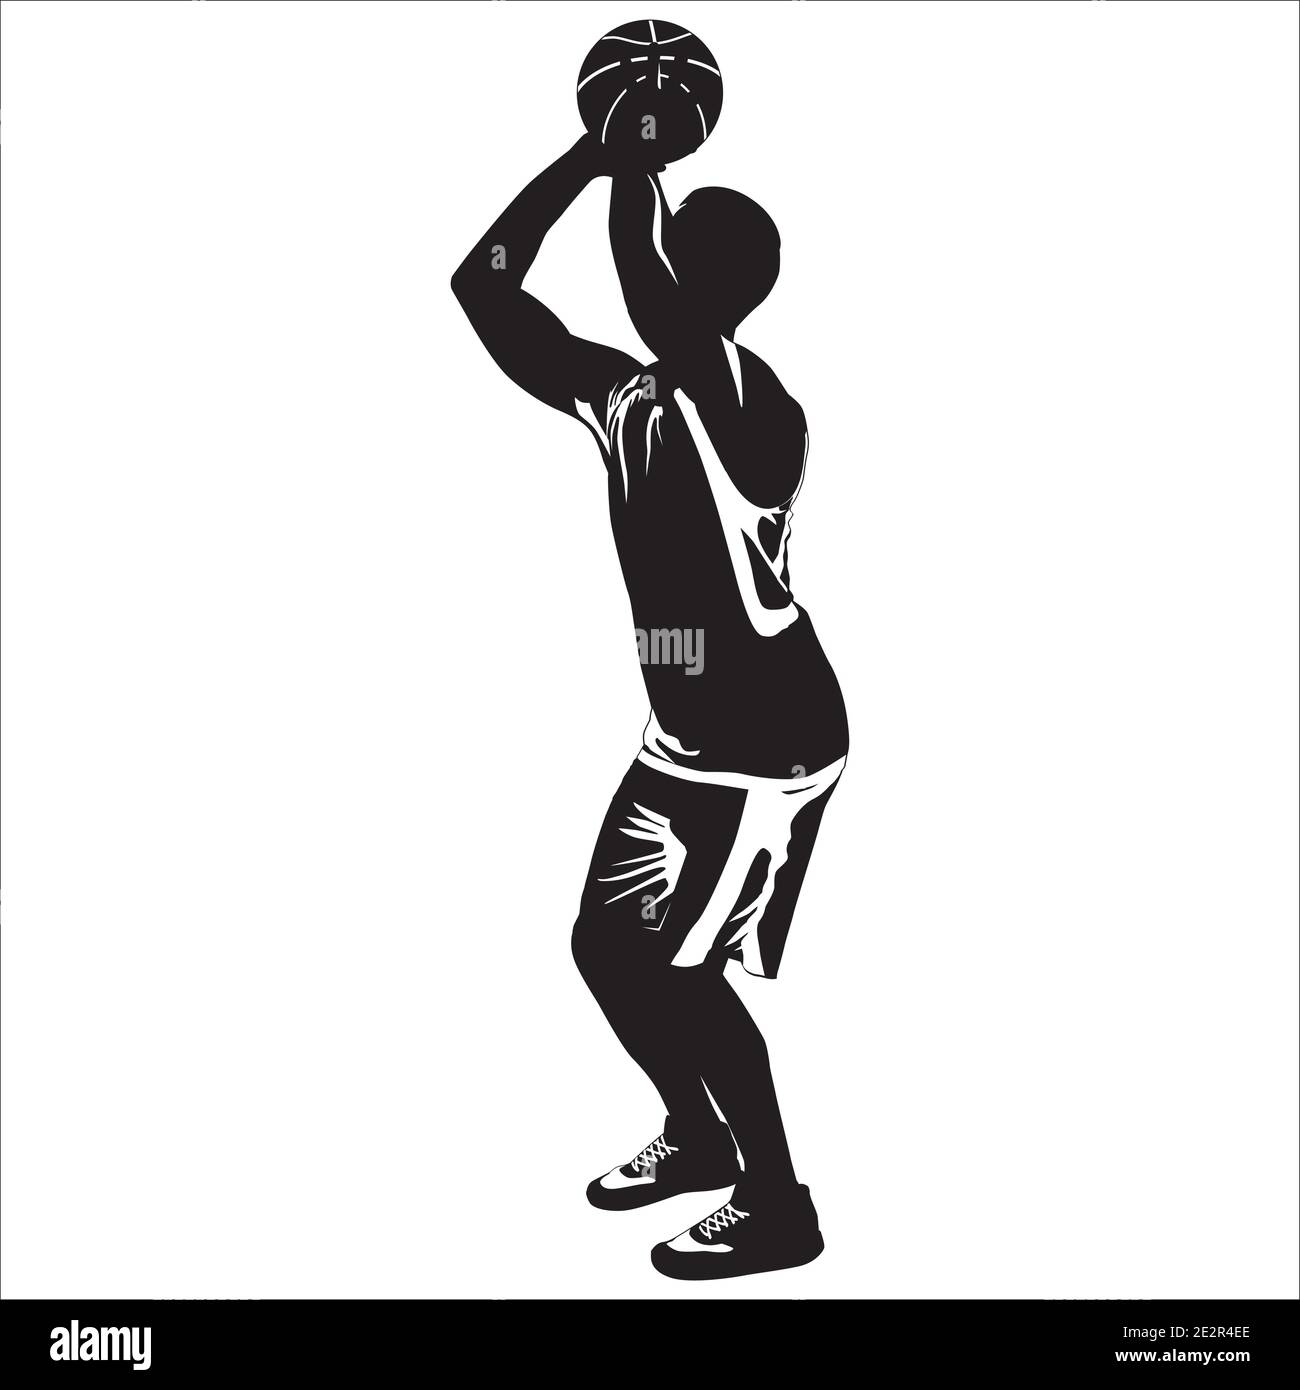 Saca la aseguranza Persona responsable boleto Jugador profesional de baloncesto silueta de tiro pelota en el aro,  ilustración vectorial Imagen Vector de stock - Alamy